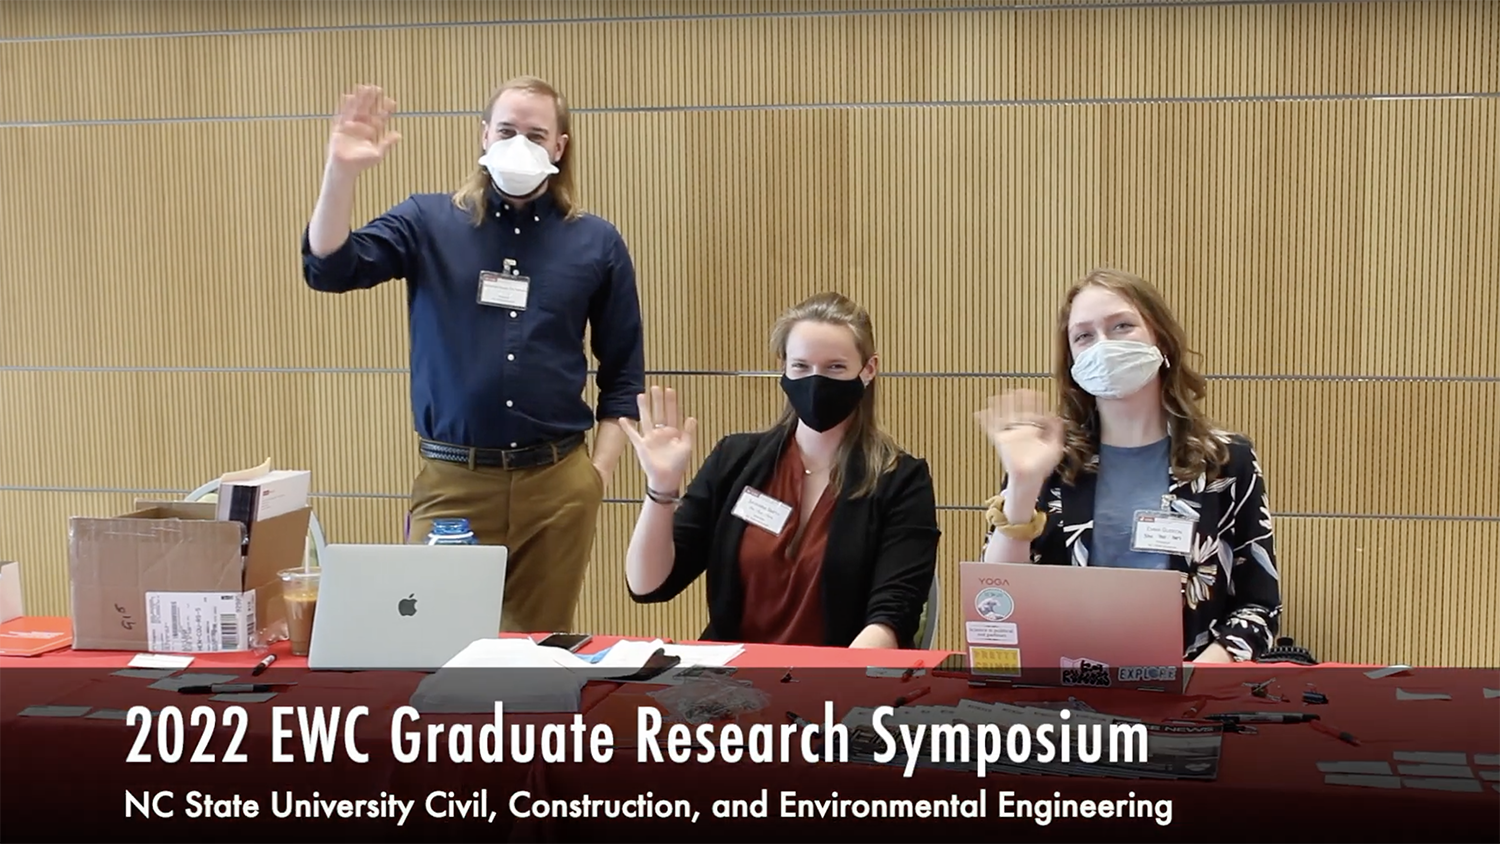 Photo of graduate students waving at camera from behind a presentation table.